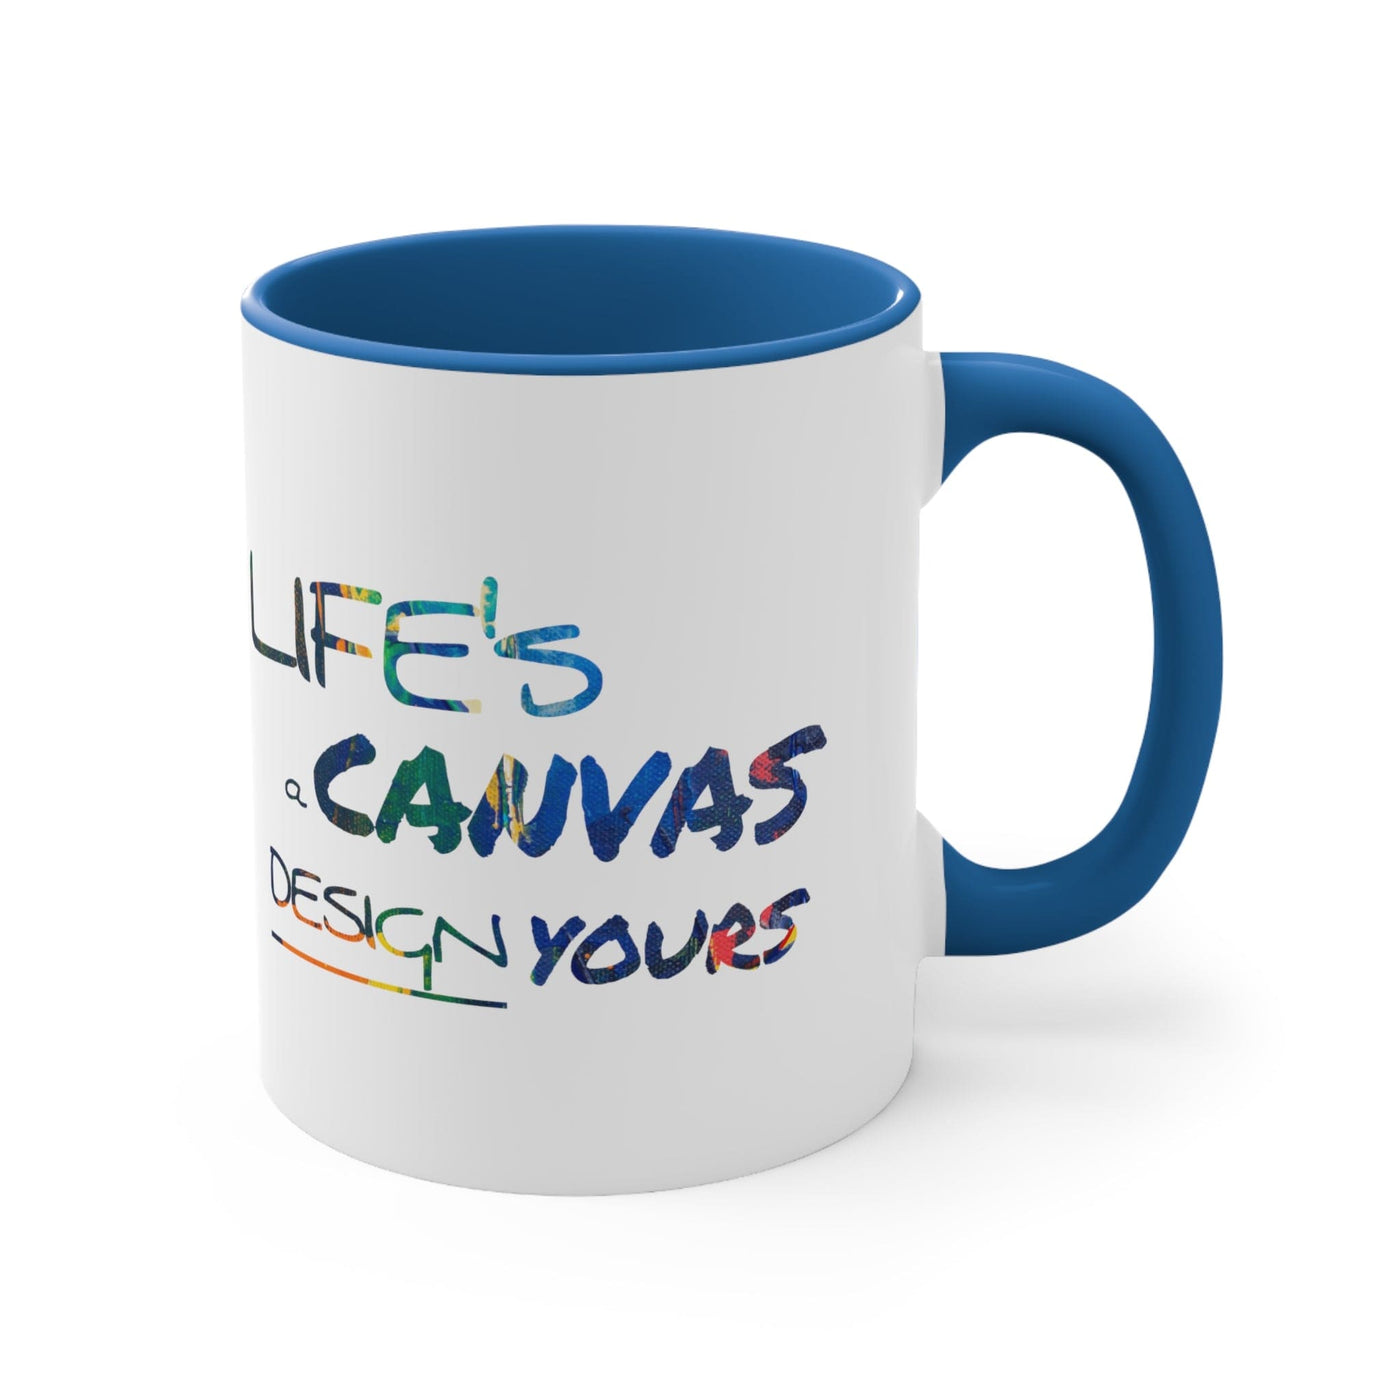 Accent Ceramic Mug 11oz Life’s a Canvas Design Yours - Motivational